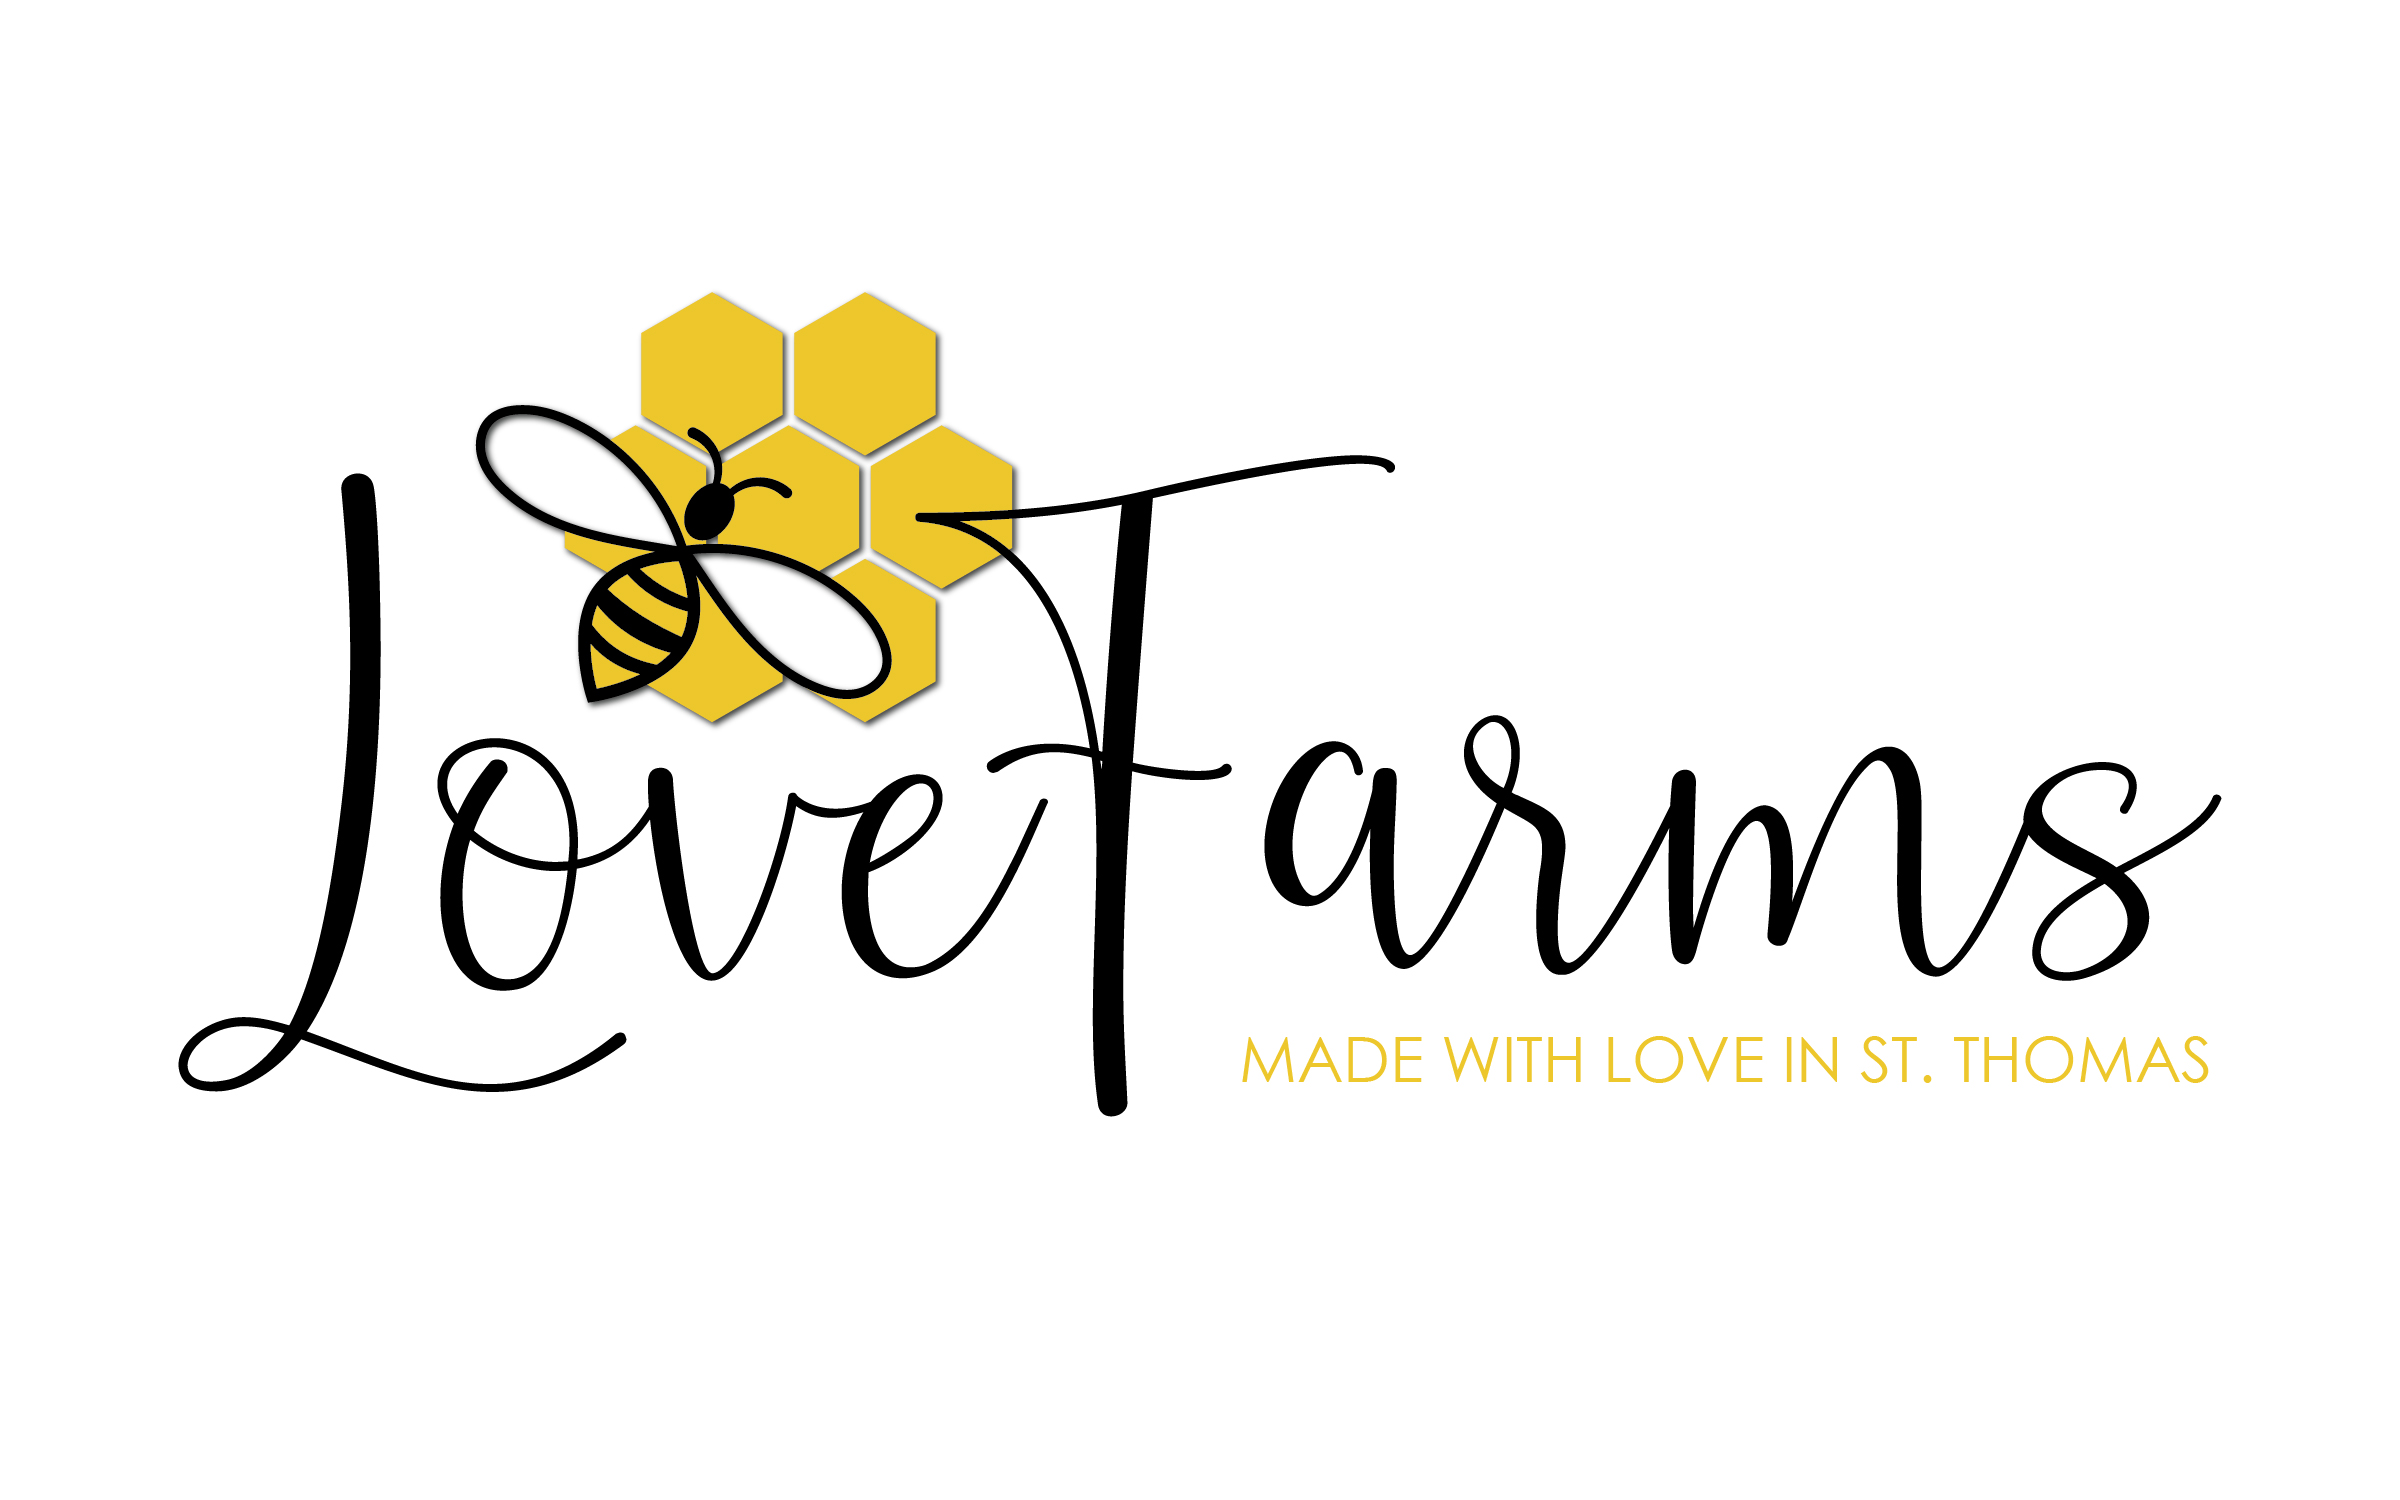 Love Farms St. Thomas USVI Logo Branding